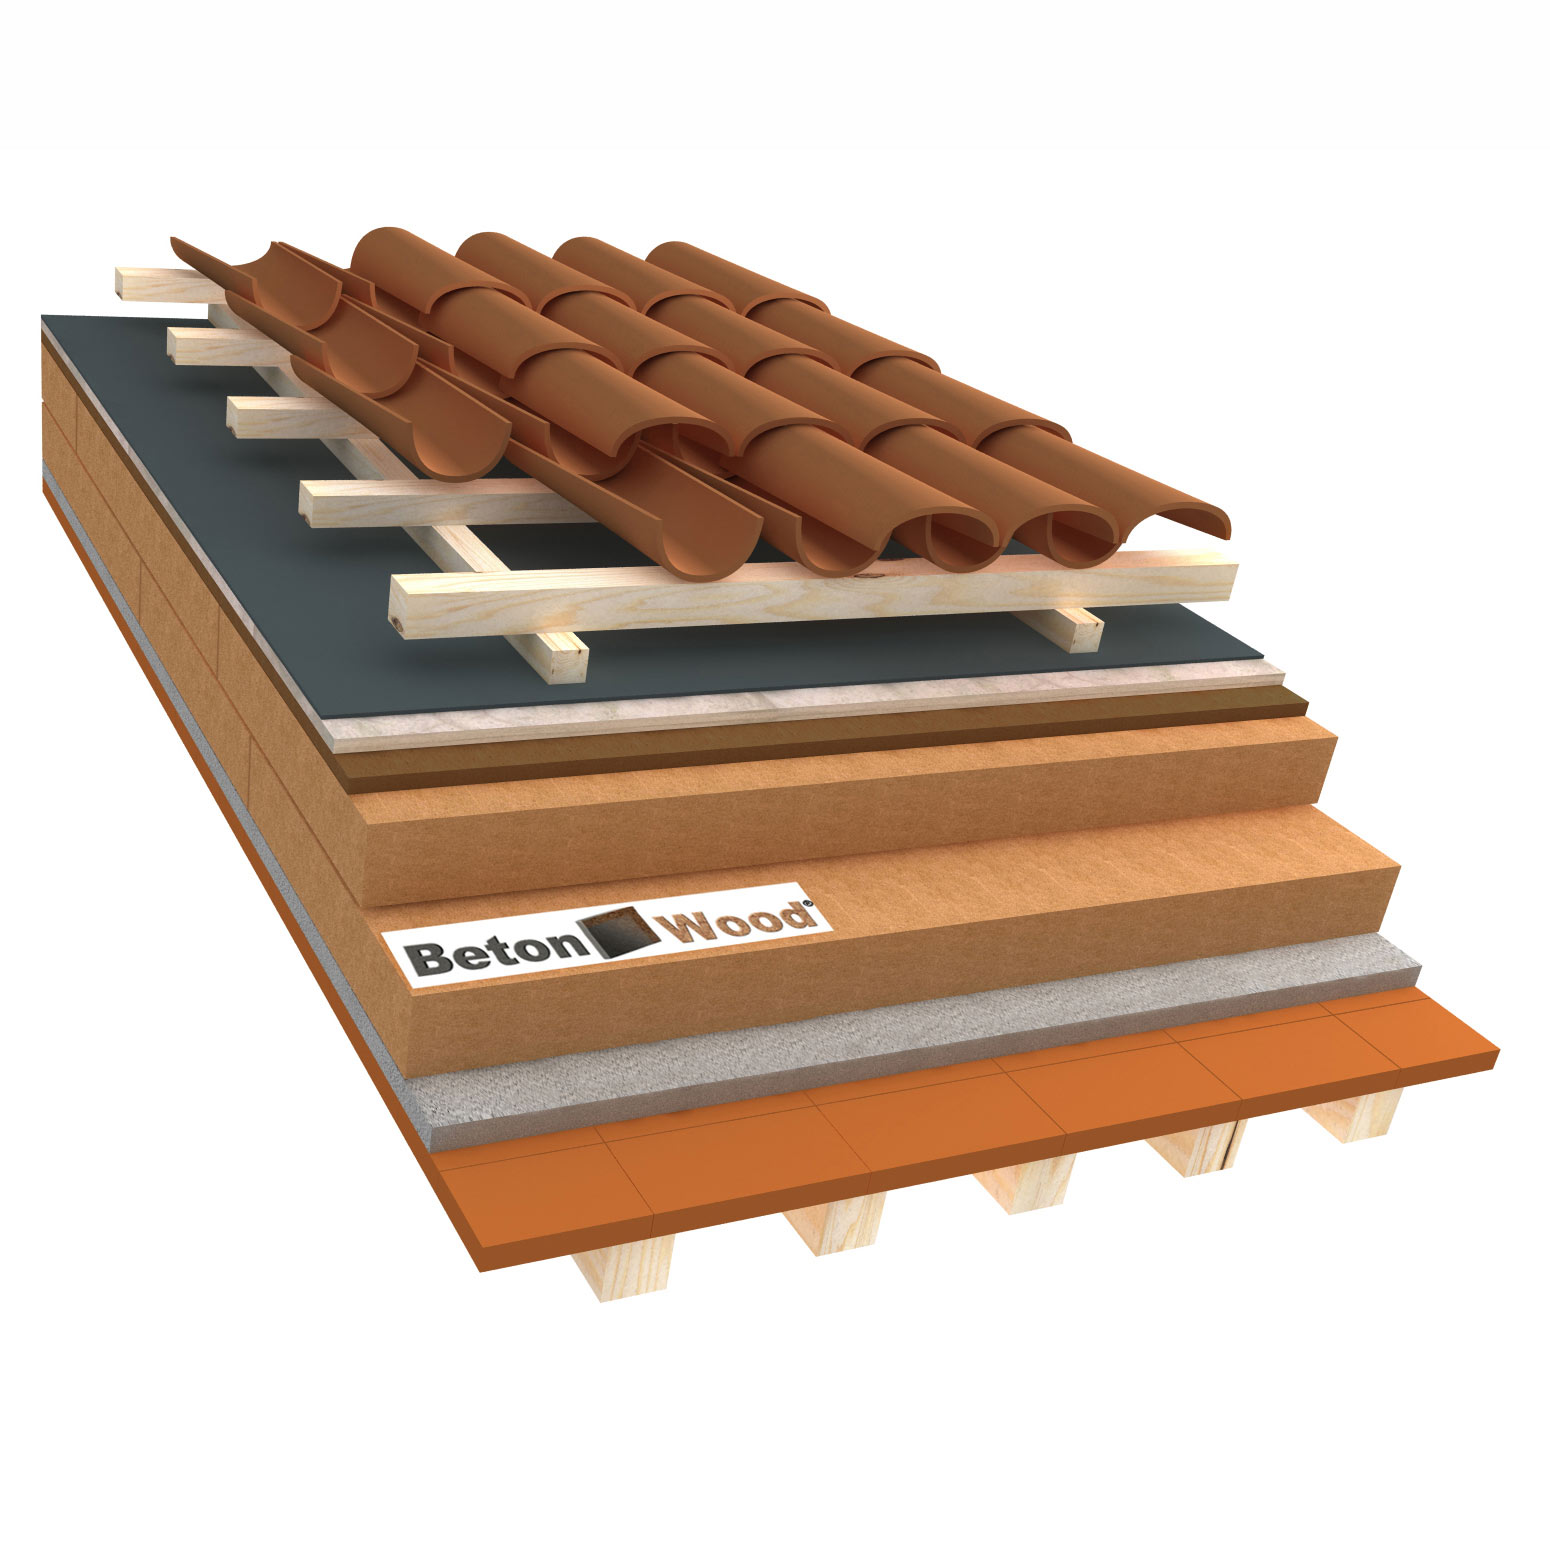 Fiber wood, Bitumfiber and BetonWood on terracotta roof